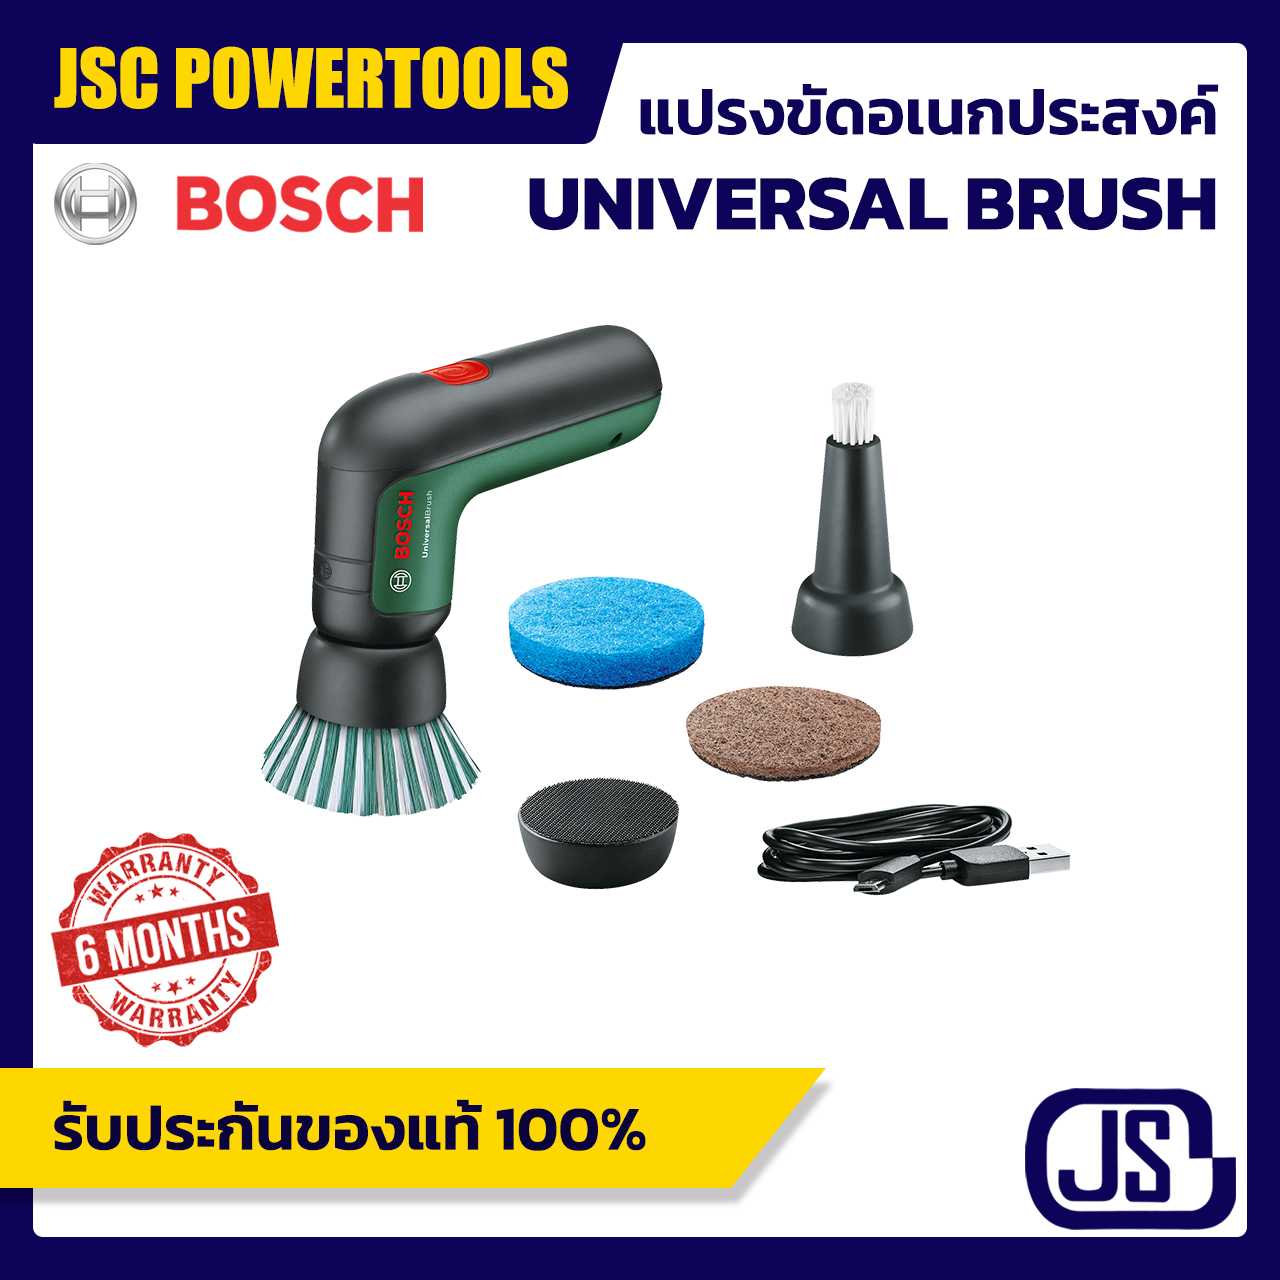 BOSCH Universal Brush แปรงขัดไฟฟ้าอเนกประสงค์ สินค้าของแท้ 100% รับประกันตามเงื่อนไขผู้ผลิต